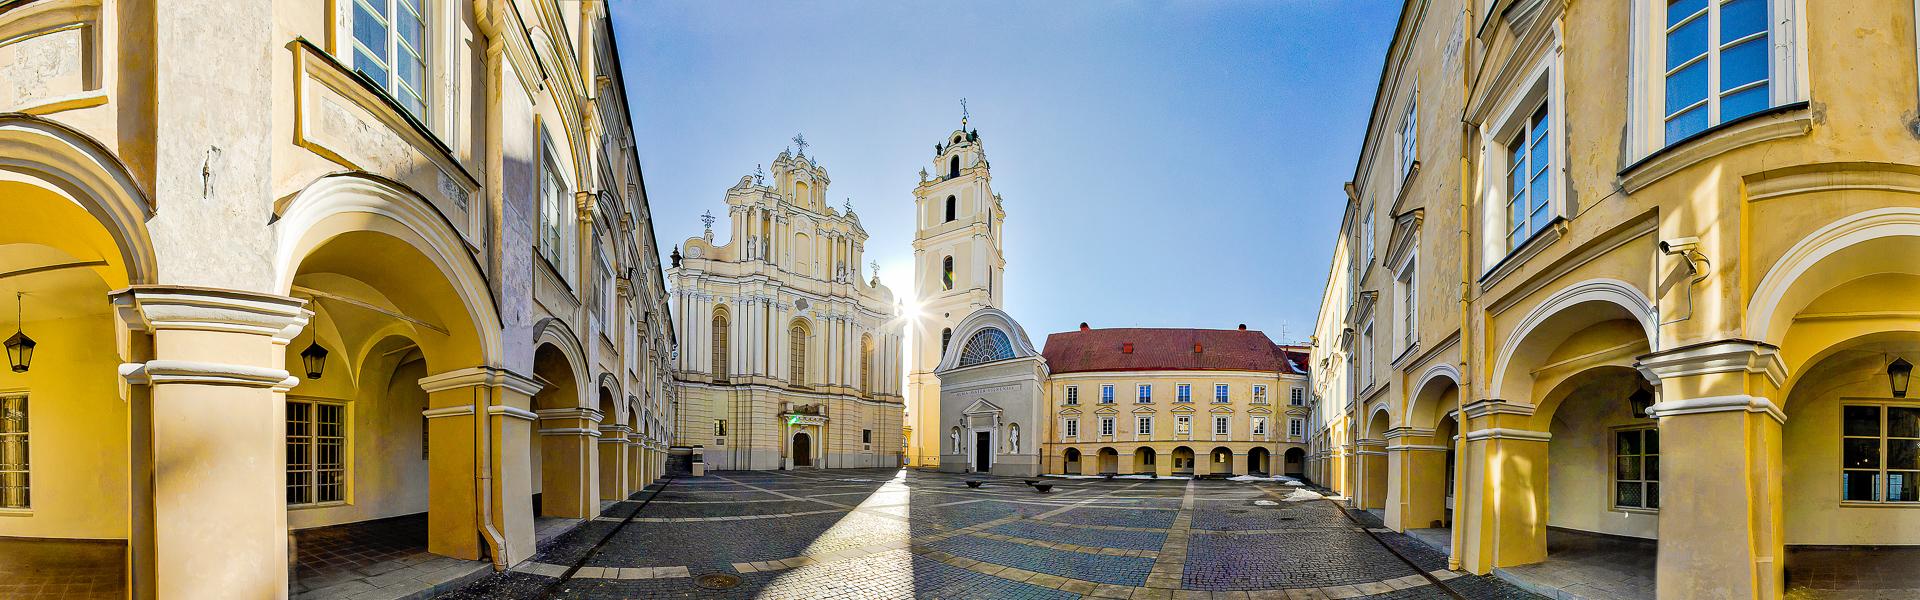 Universitt von Vilnius |  Laimonas Ciunys, Lithuania Travel / Chamleon